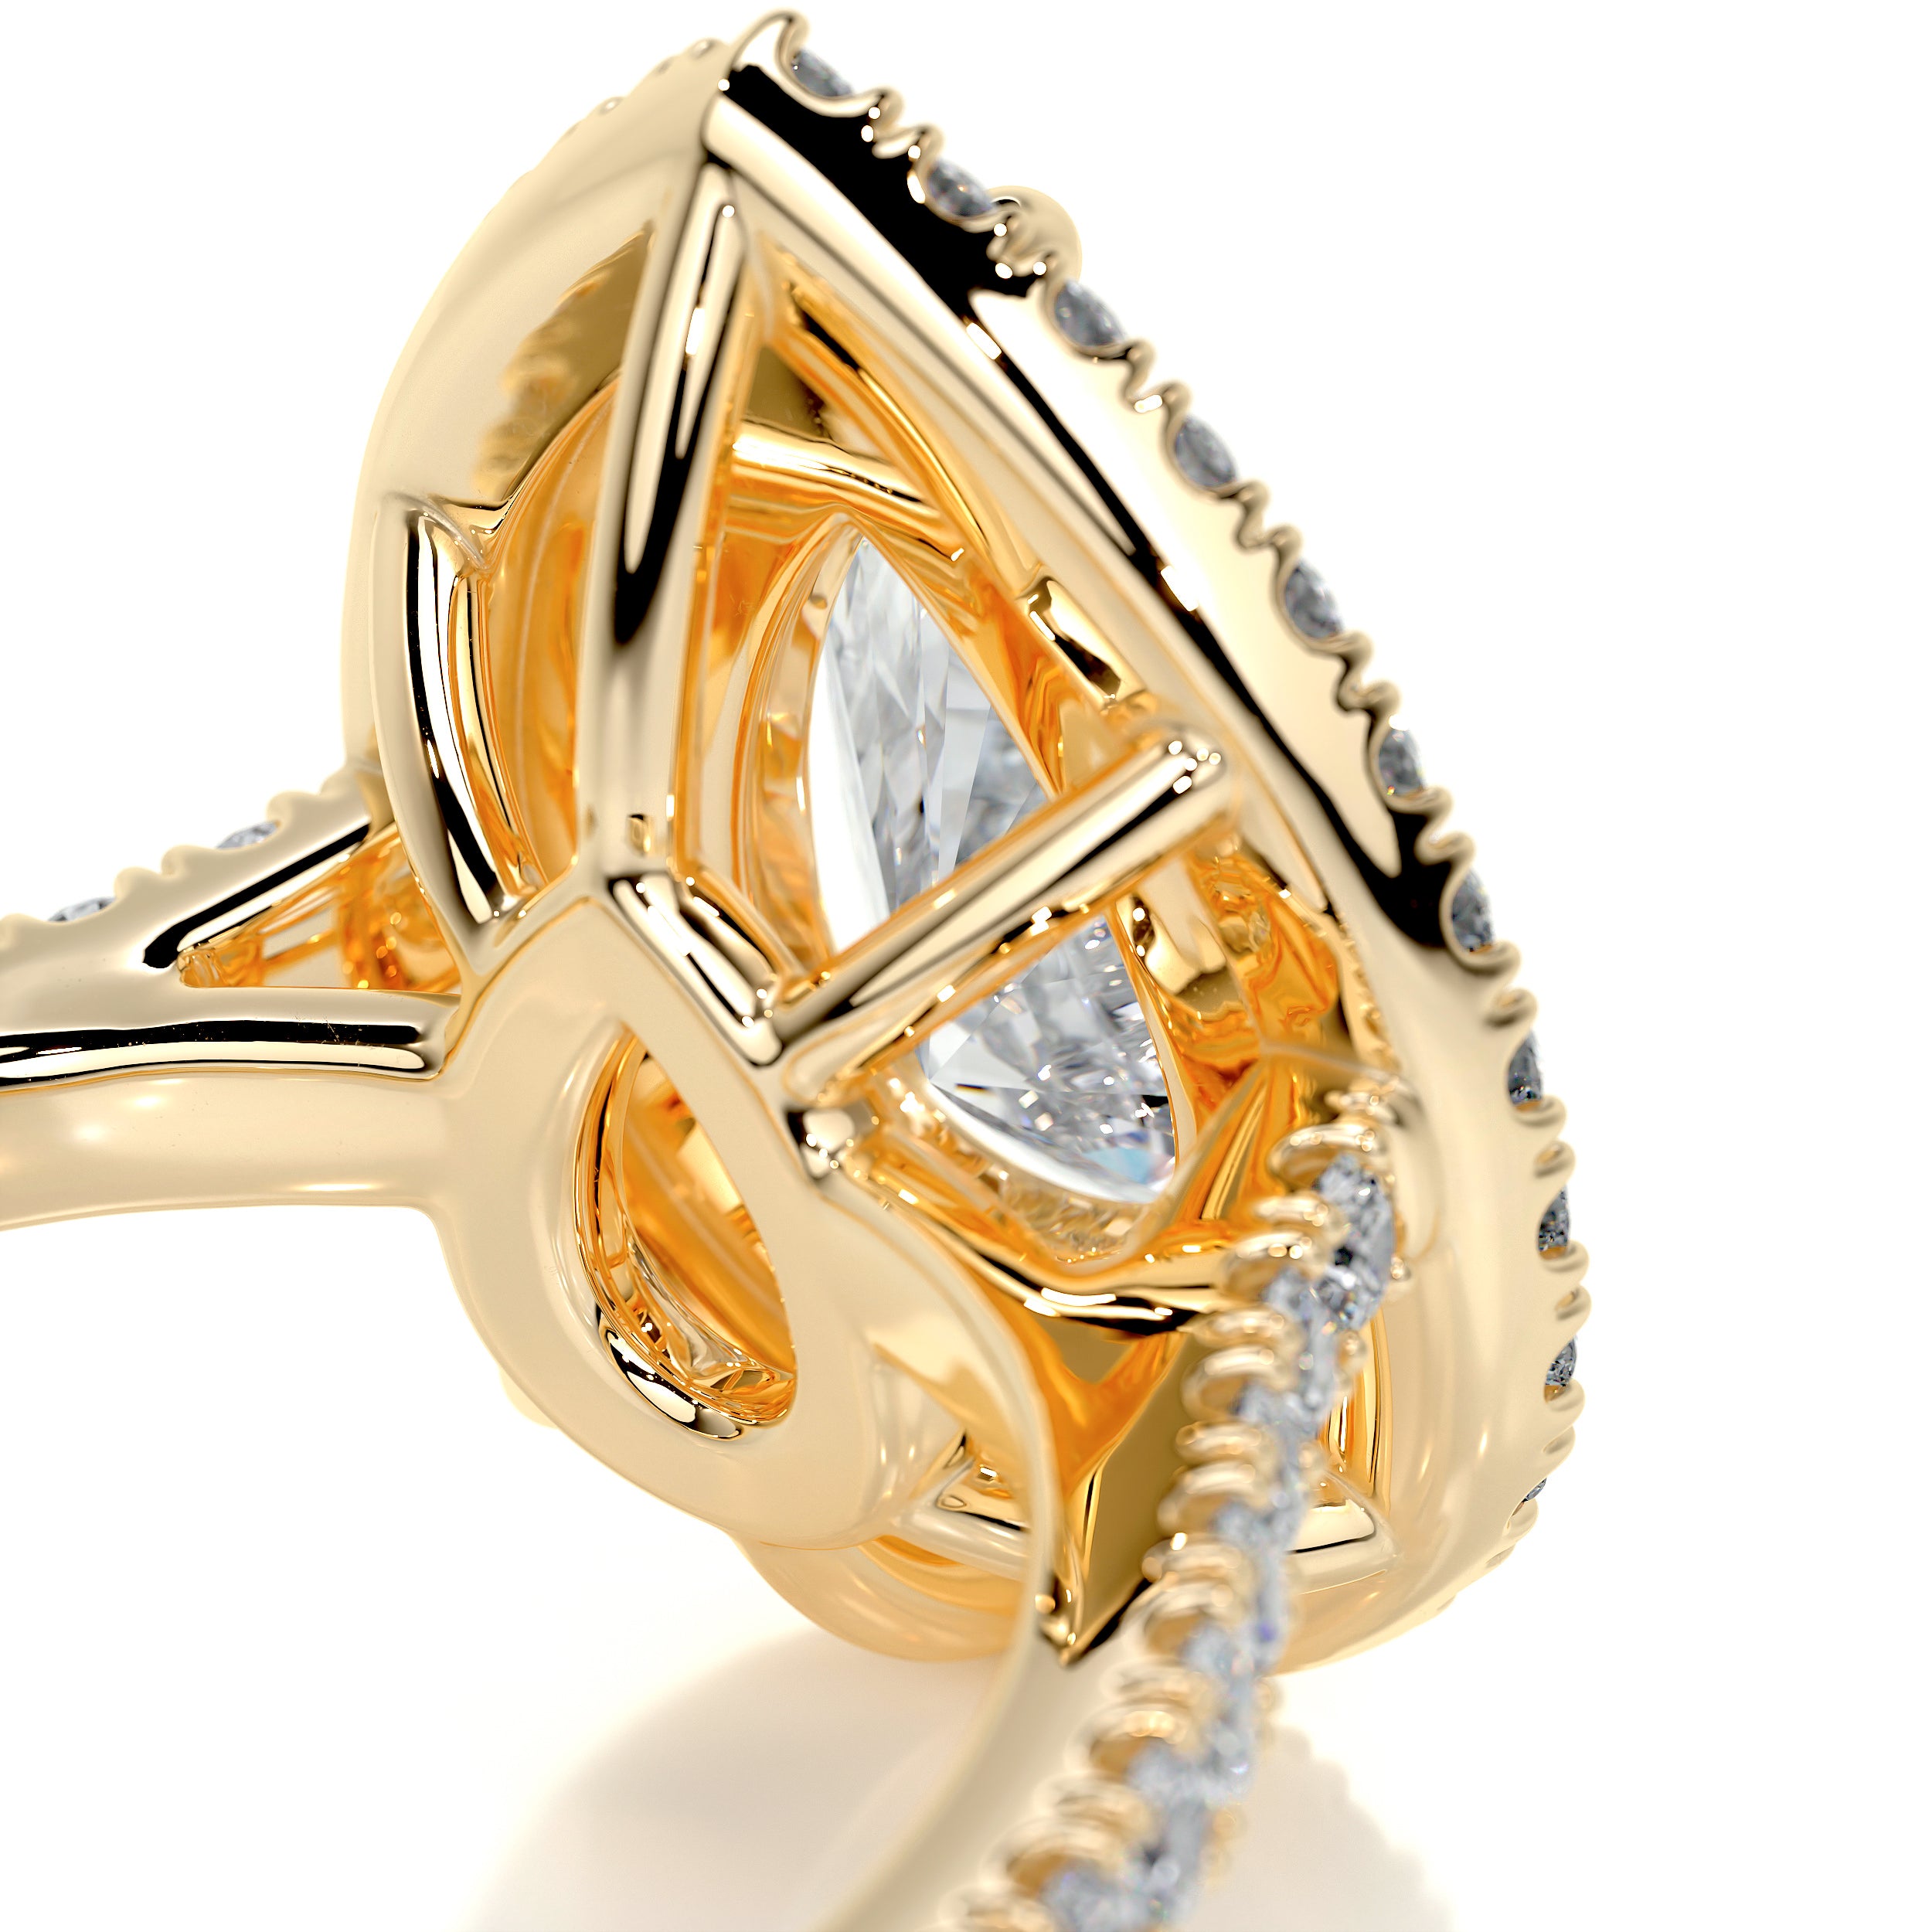 Gloria Diamond Engagement Ring   (1.65 Carat) -18K Yellow Gold